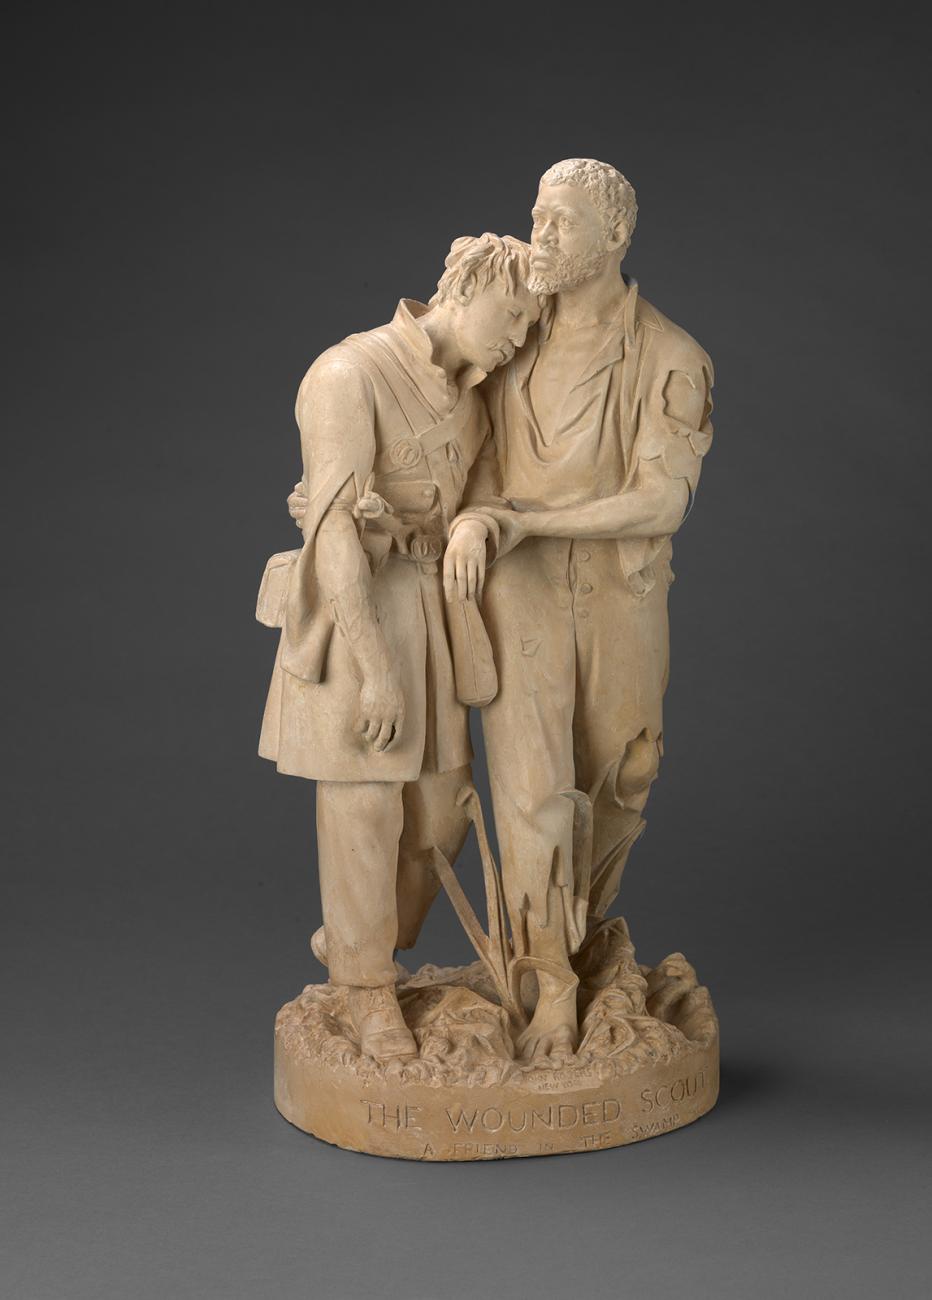 A sculpture of two men